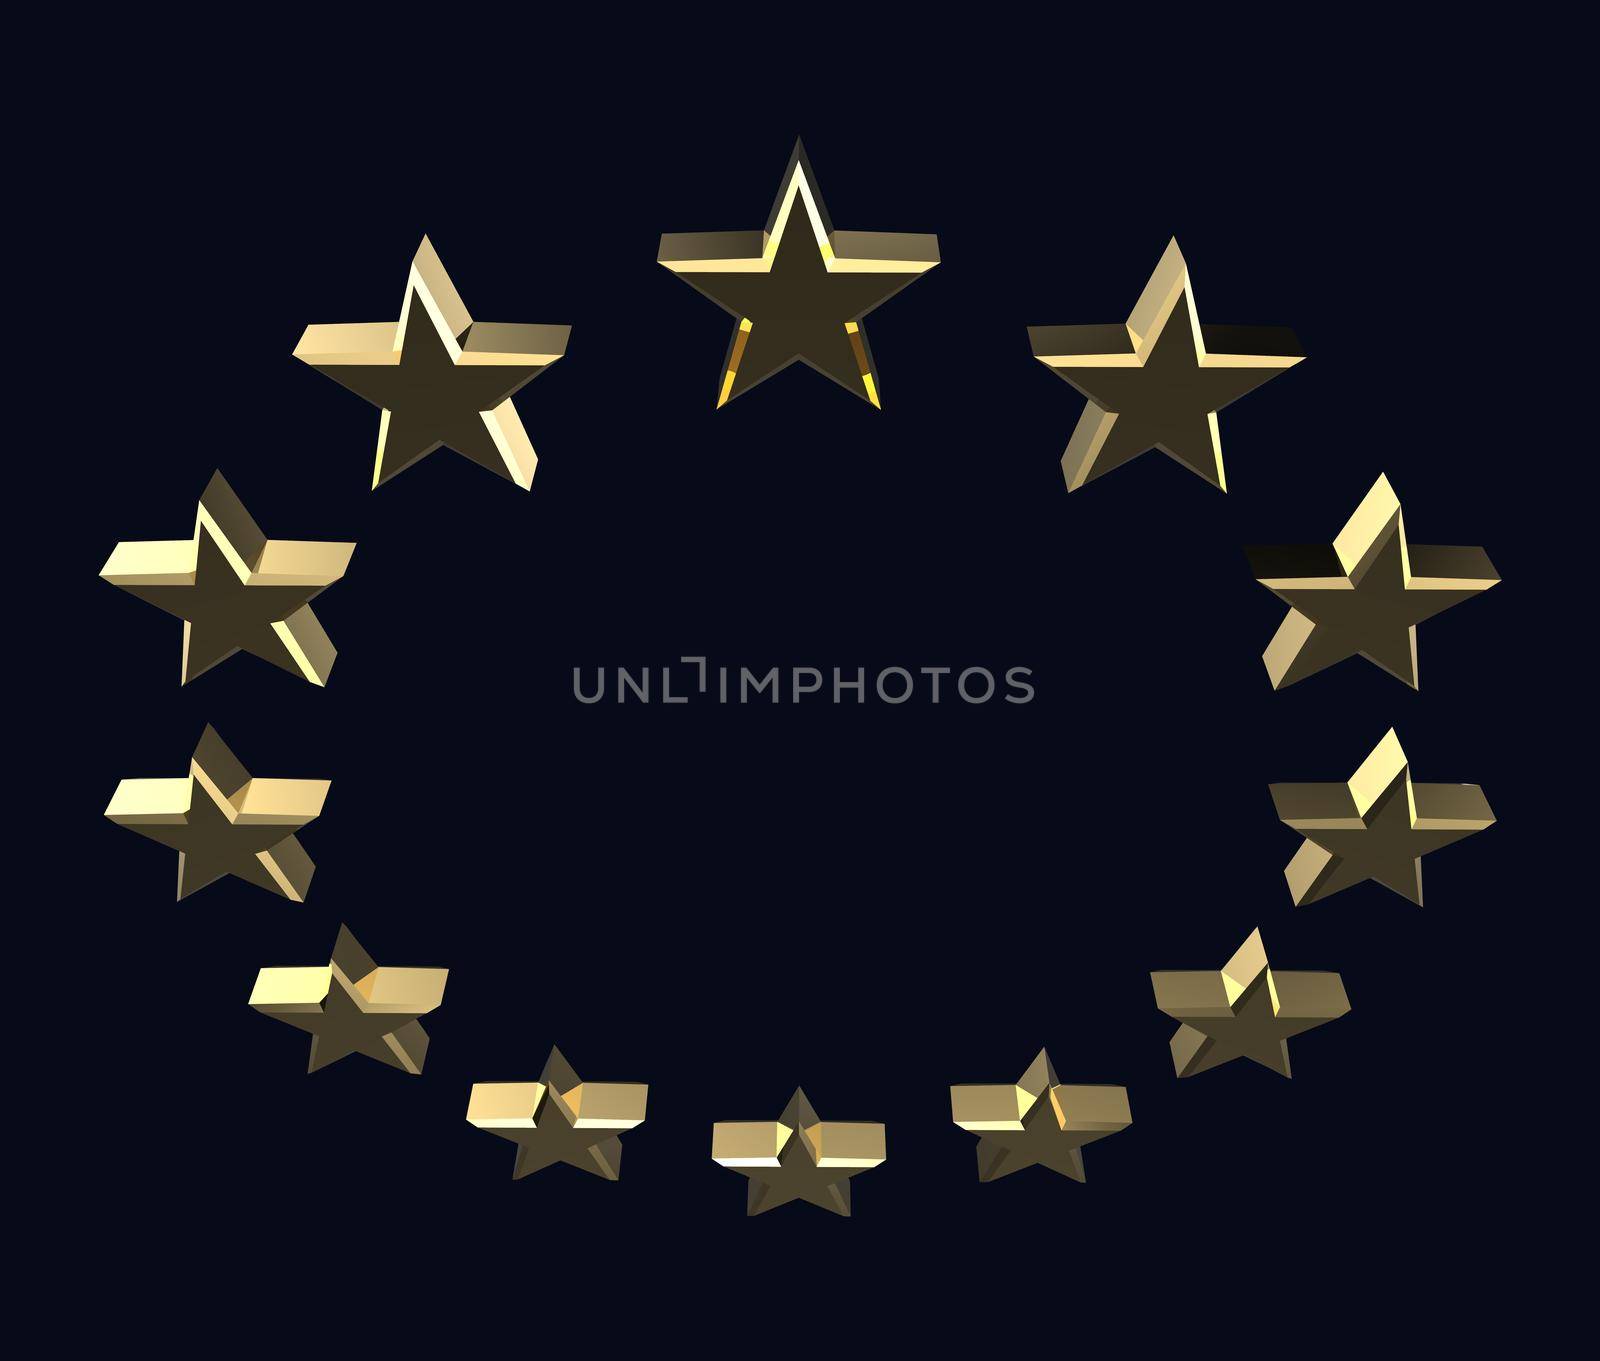 Golden metal European Union logo stars on dark blue background. 3D rendering illustration